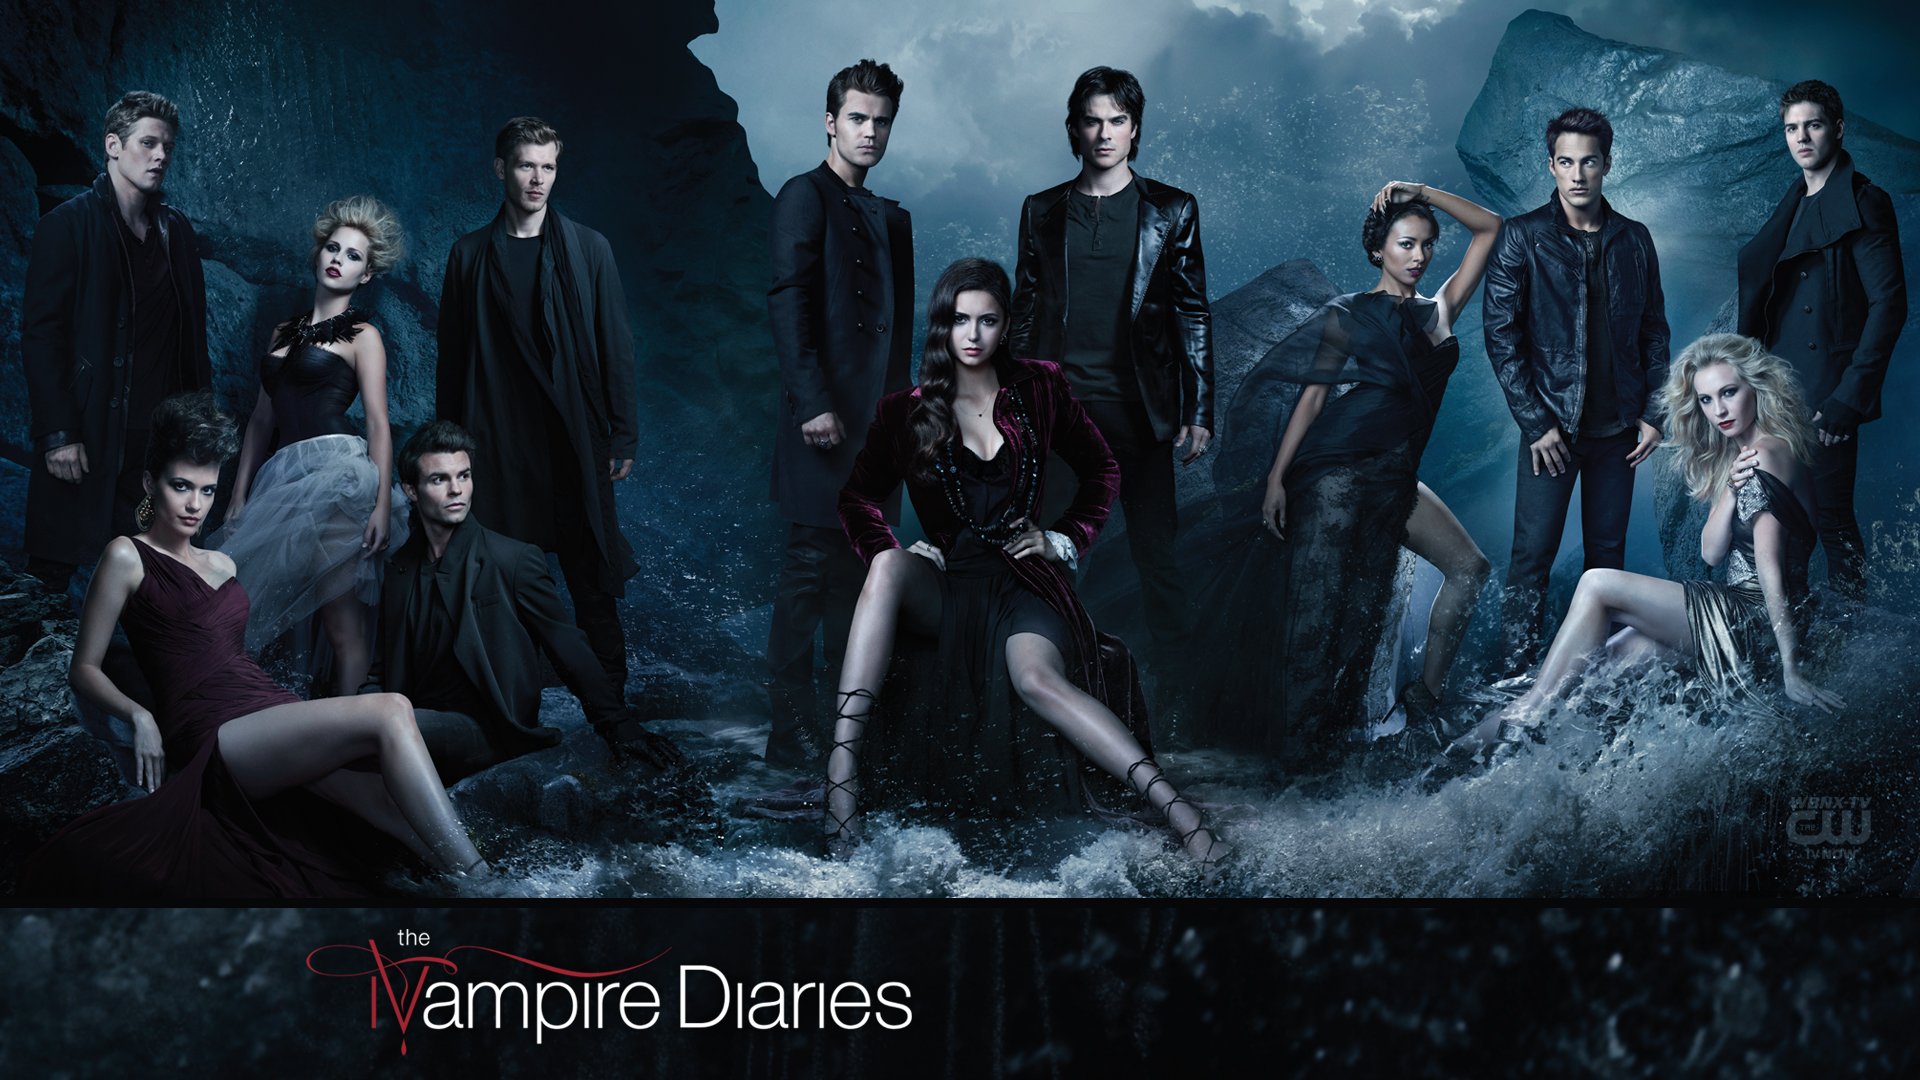 The Vampire Diaries Vampire Cast S4 Full   WBNX TV Clevelands CW